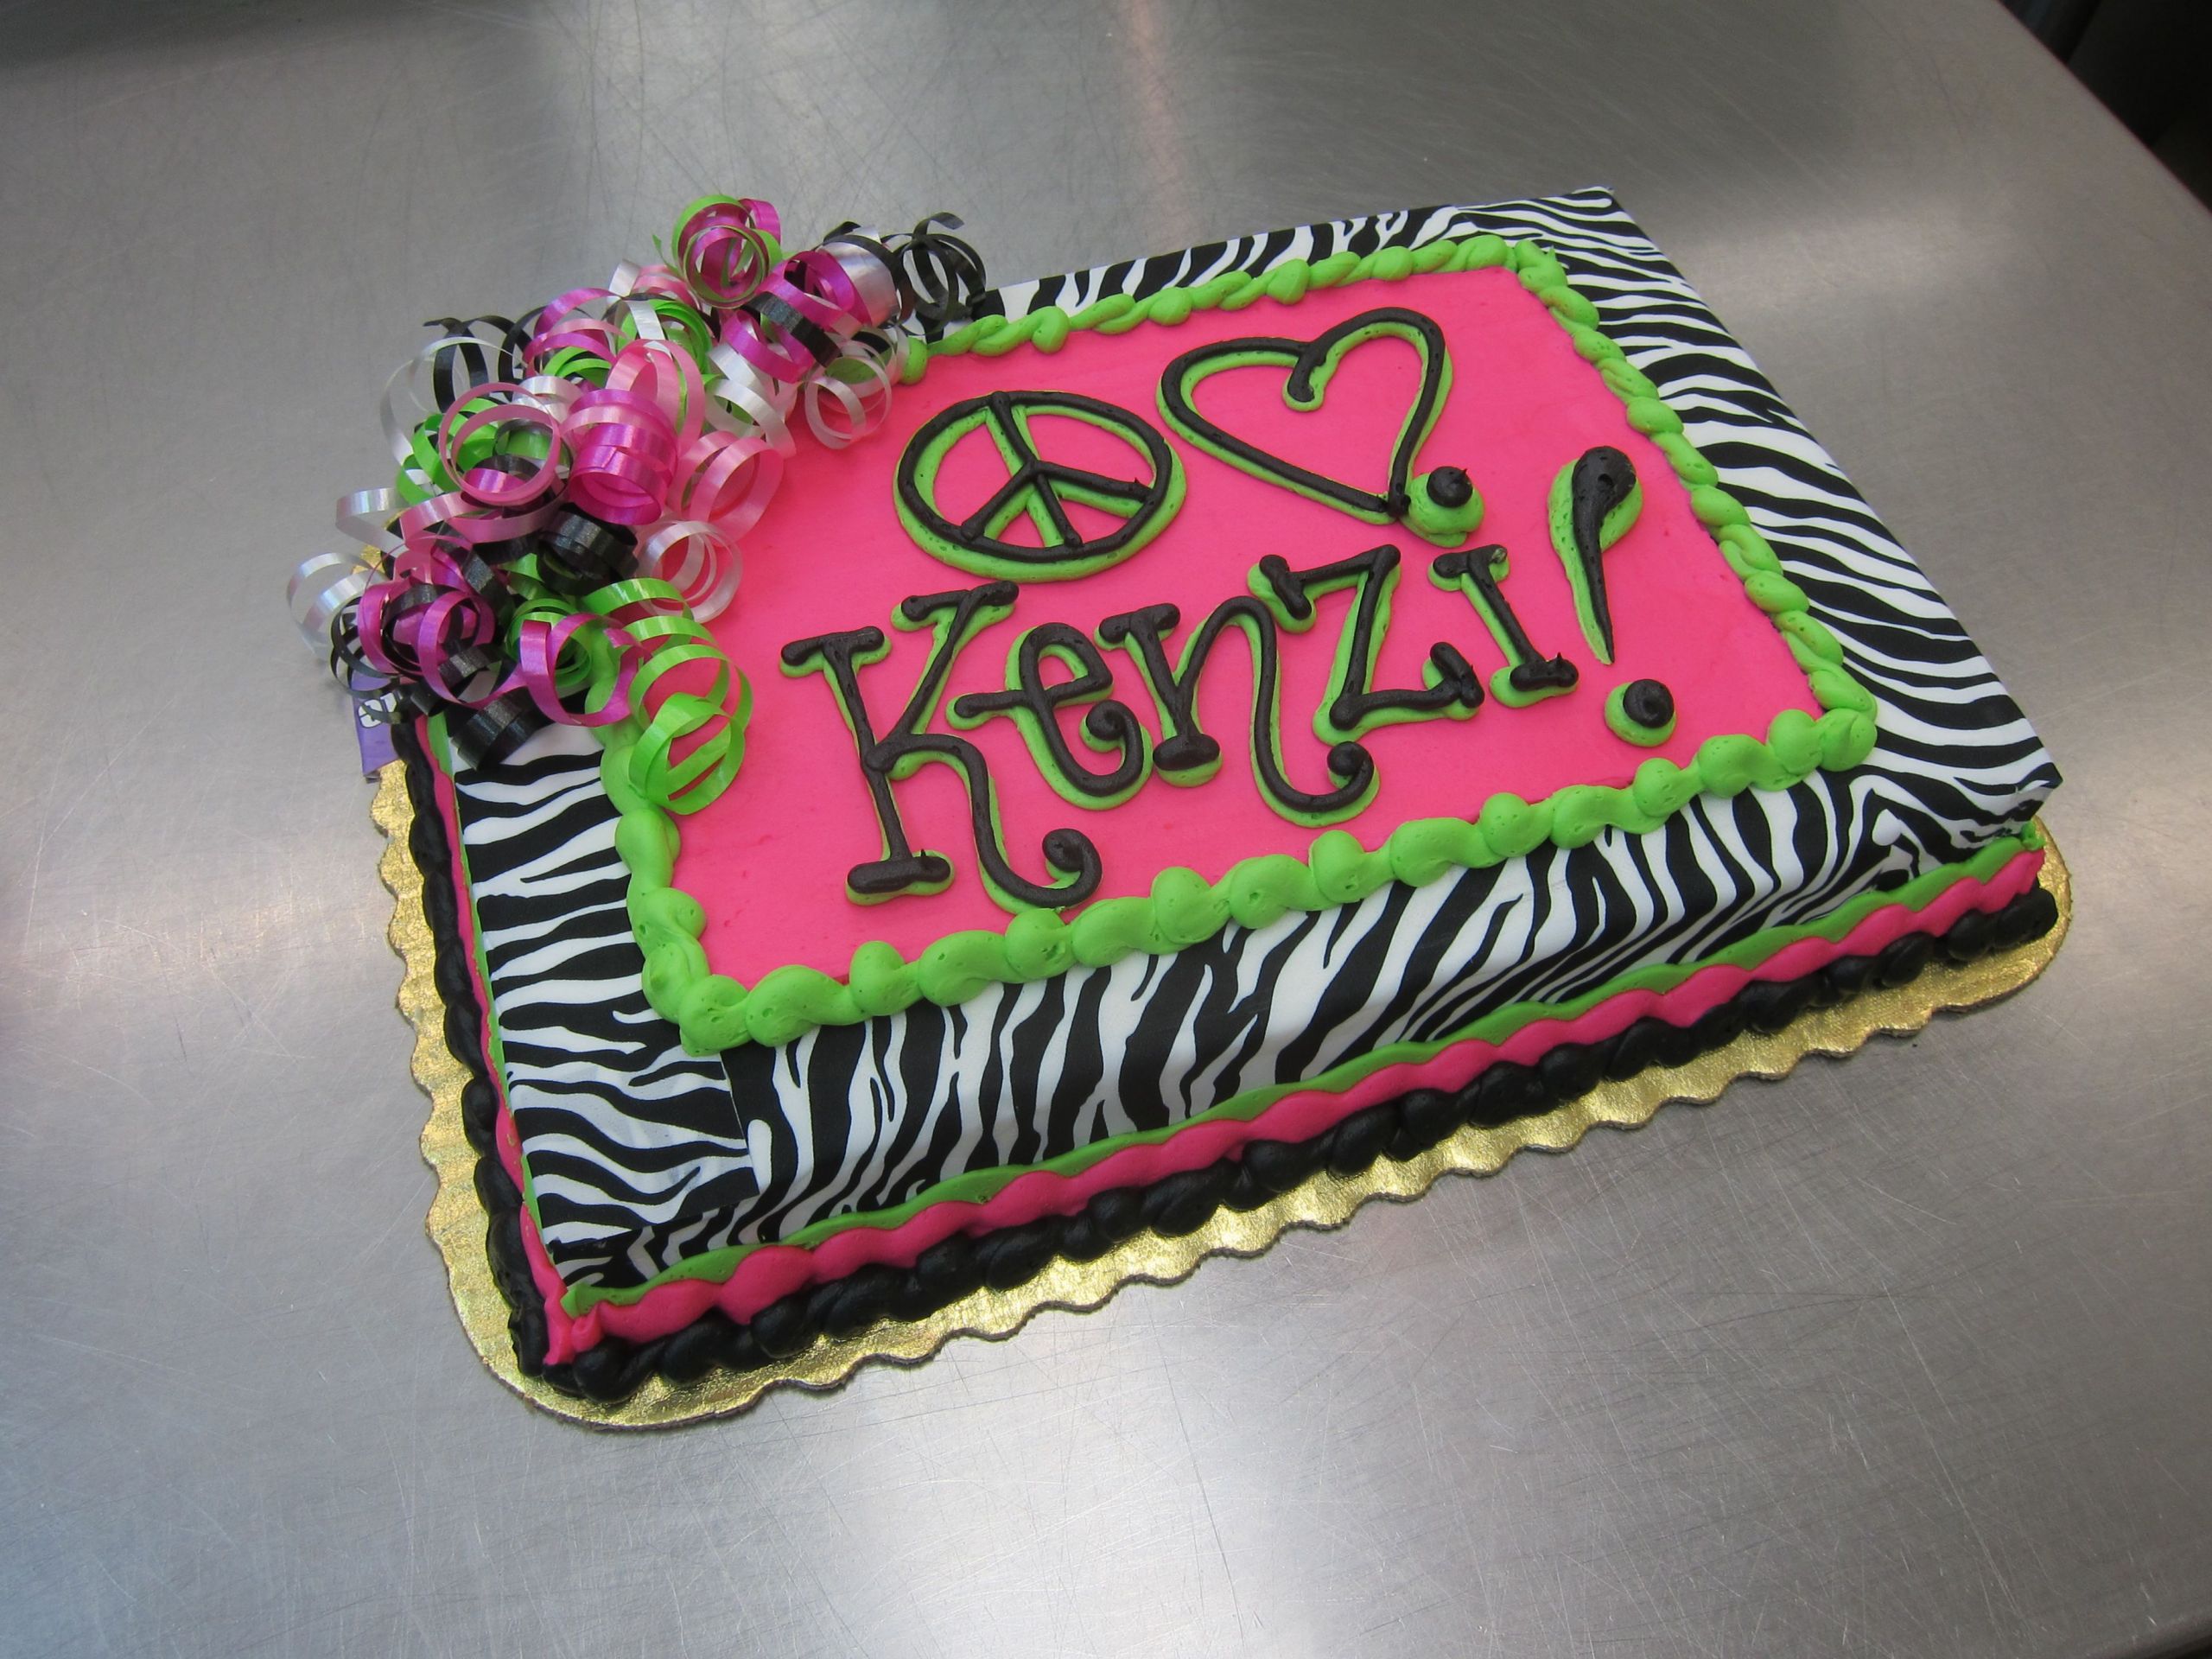 Hy Vee Birthday Cakes
 Peace and Love with Zebra Print Cake by Stephanie Dillon